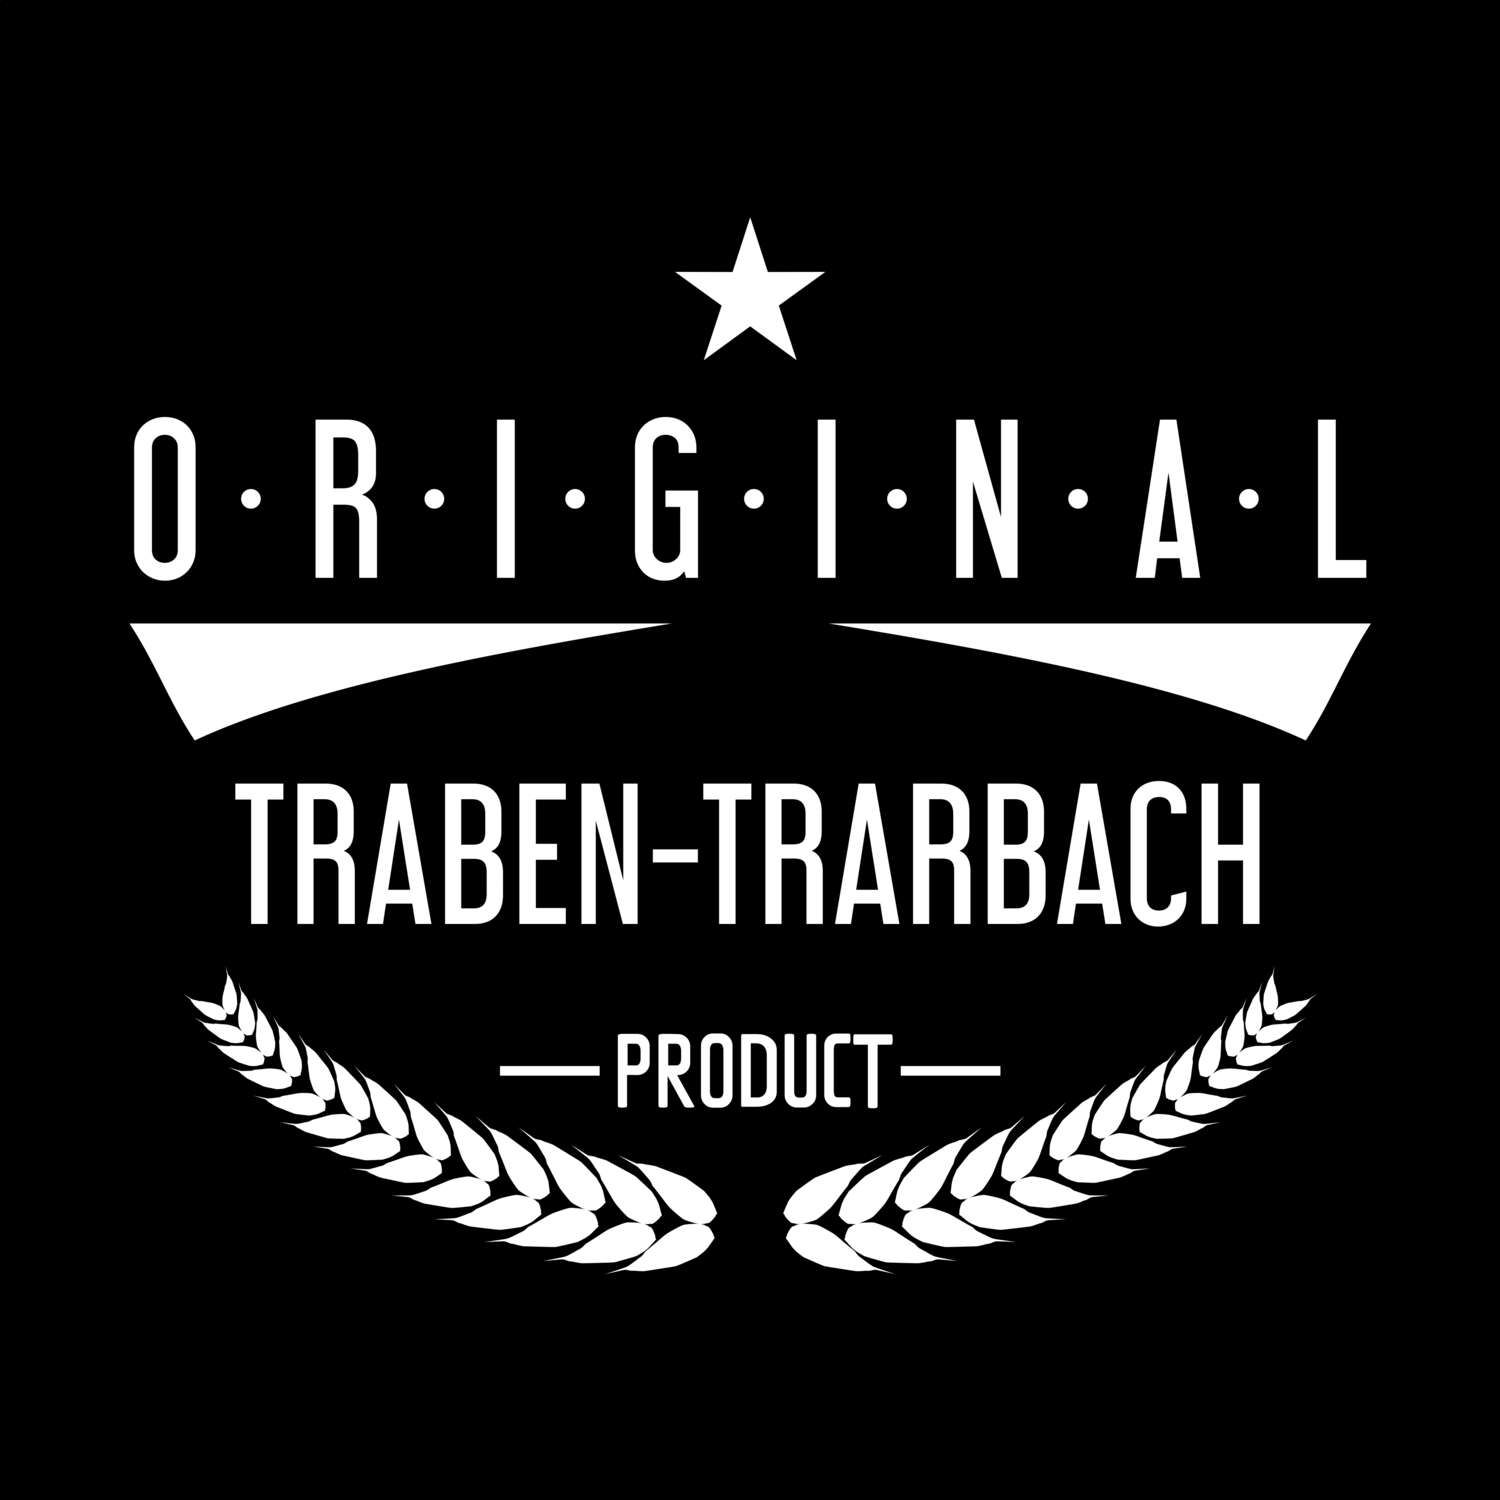 Traben-Trarbach T-Shirt »Original Product«